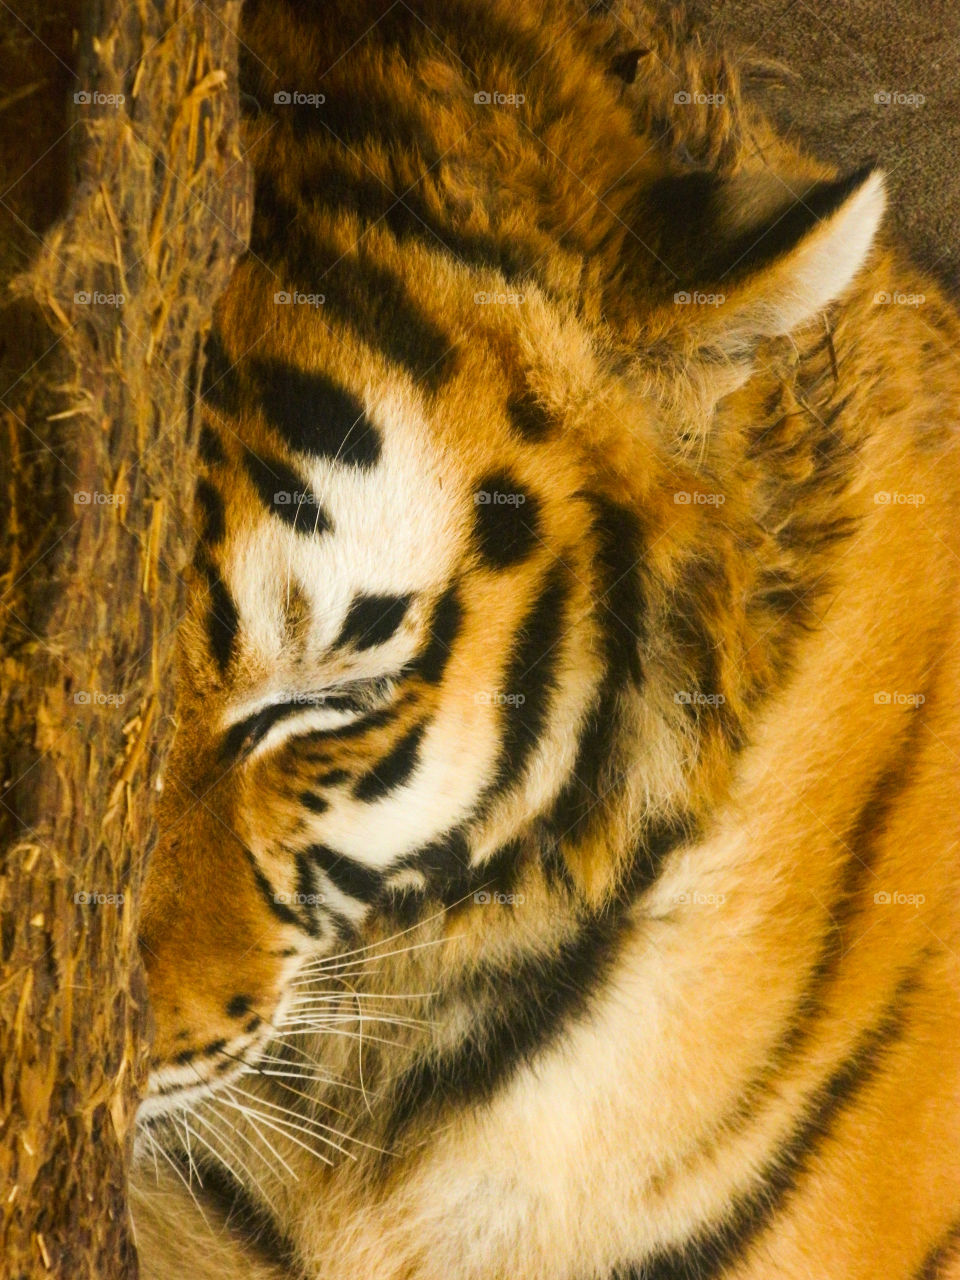 Tiger falling asleep